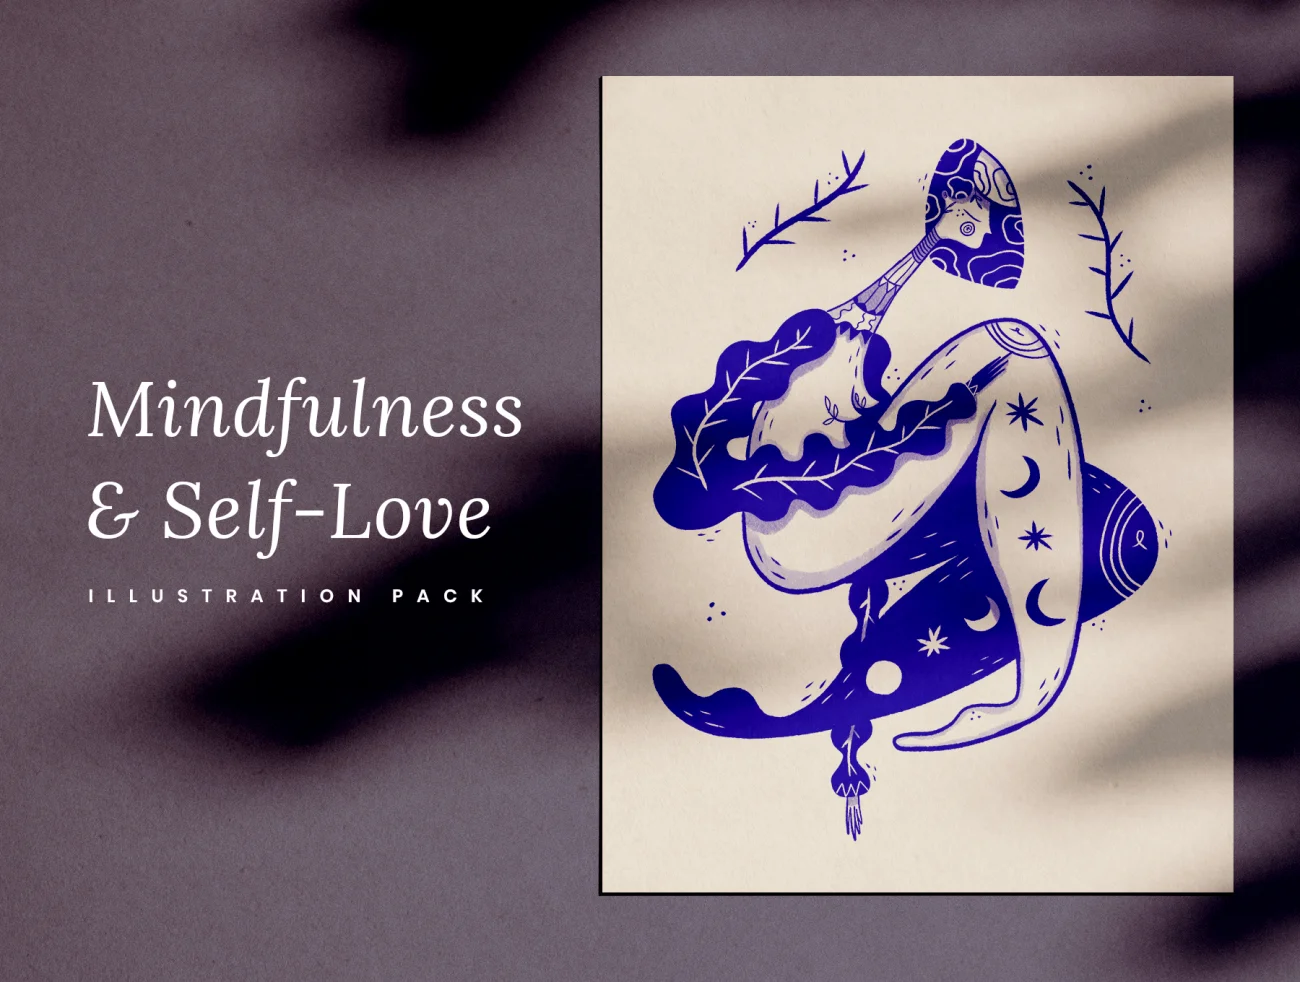 Mindfulness Self love Illustrations Drawings of Self Care 和风正念自爱插图自我关怀的矢量版画图案合集-人物插画、插画、插画风格、概念创意、线条手绘、趣味漫画-到位啦UI